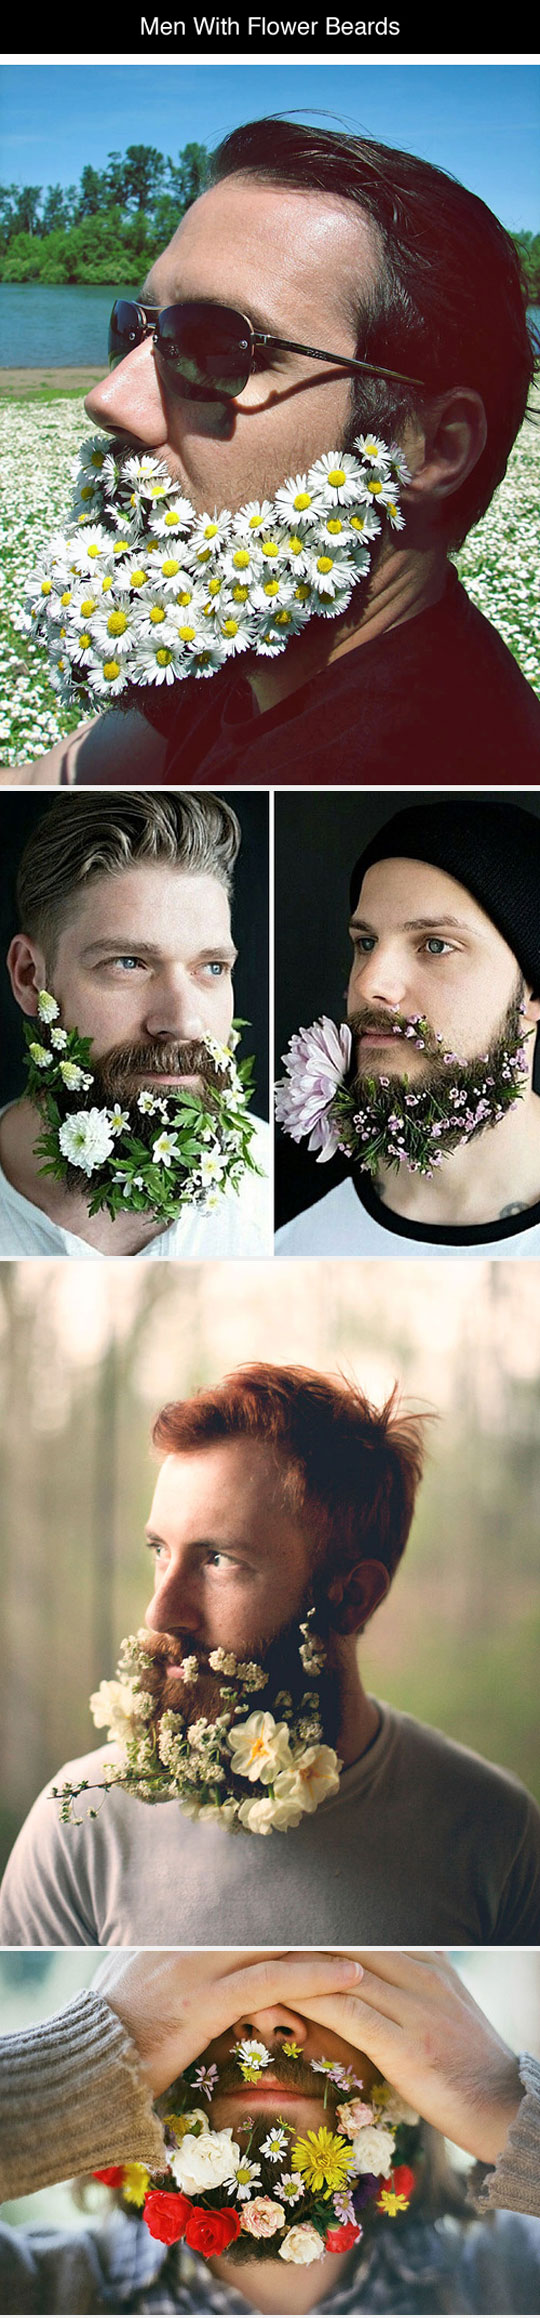 funny-man-beard-flowers